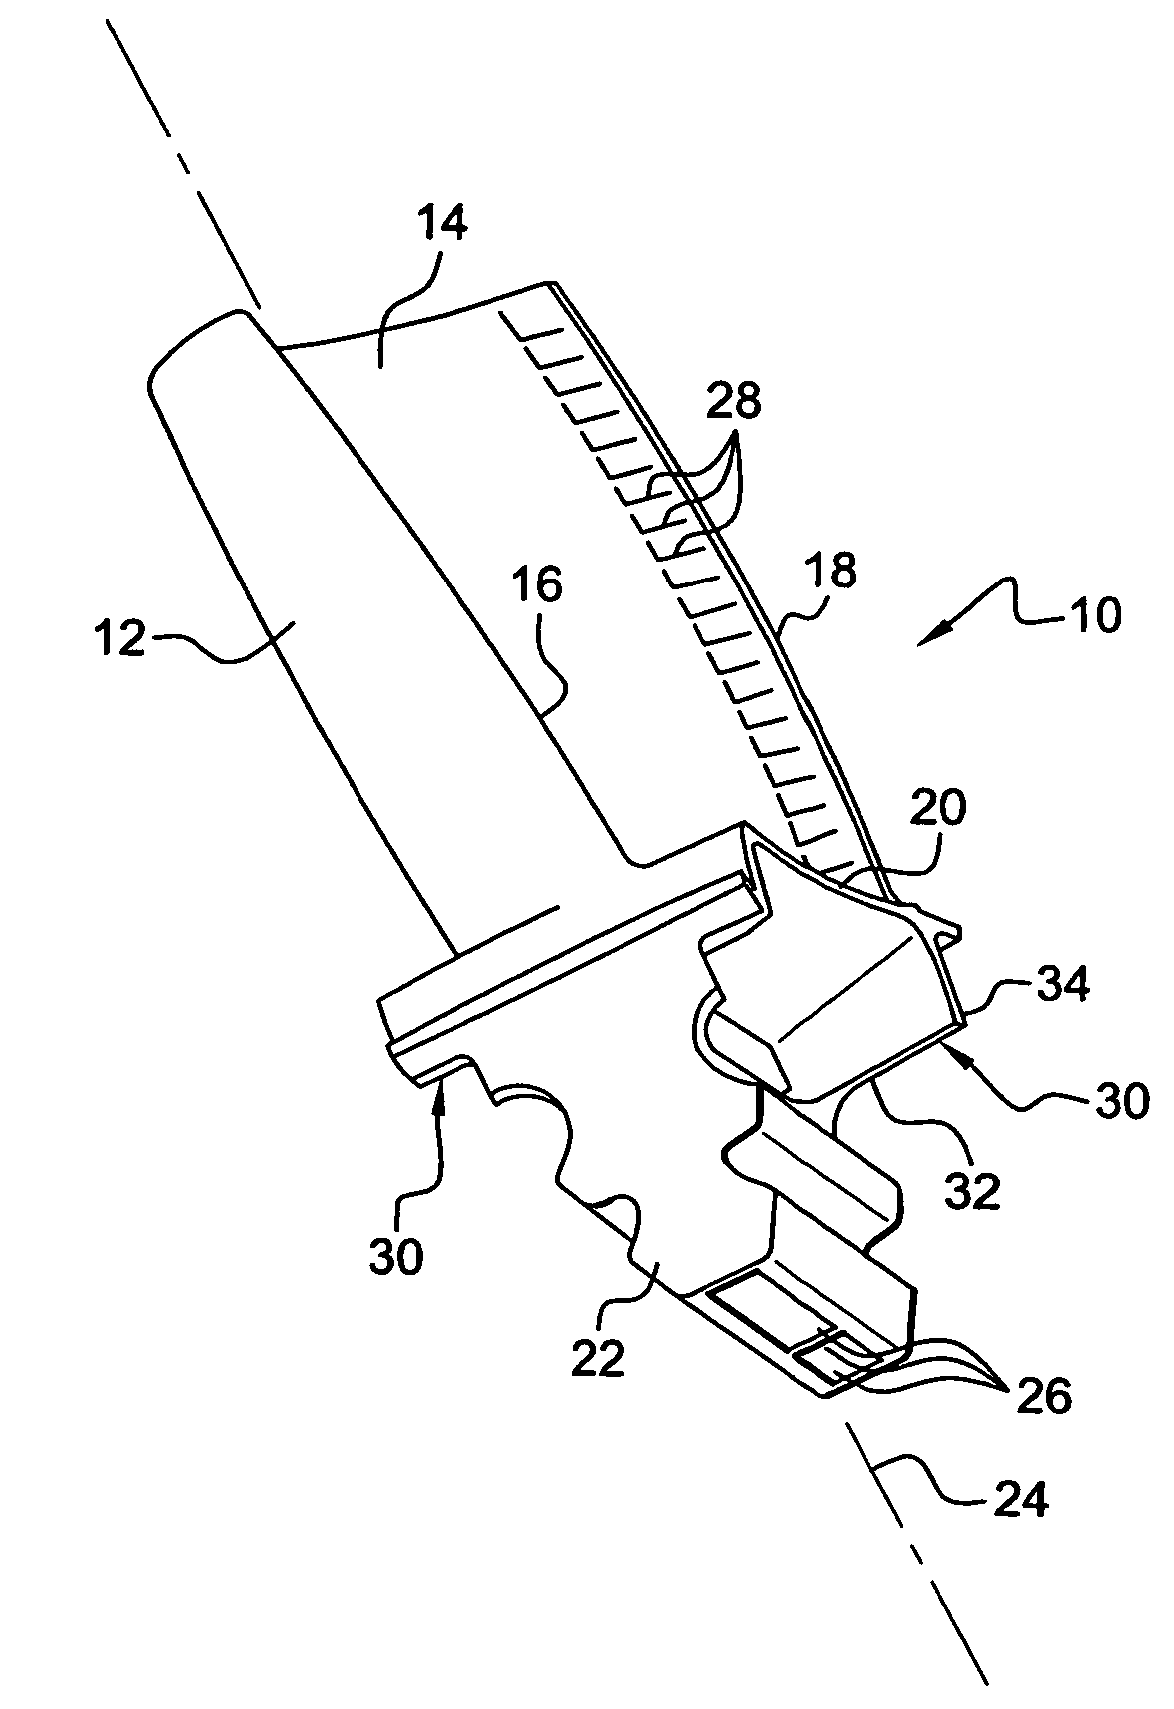 Rotor blade for a compressor or a gas turbine